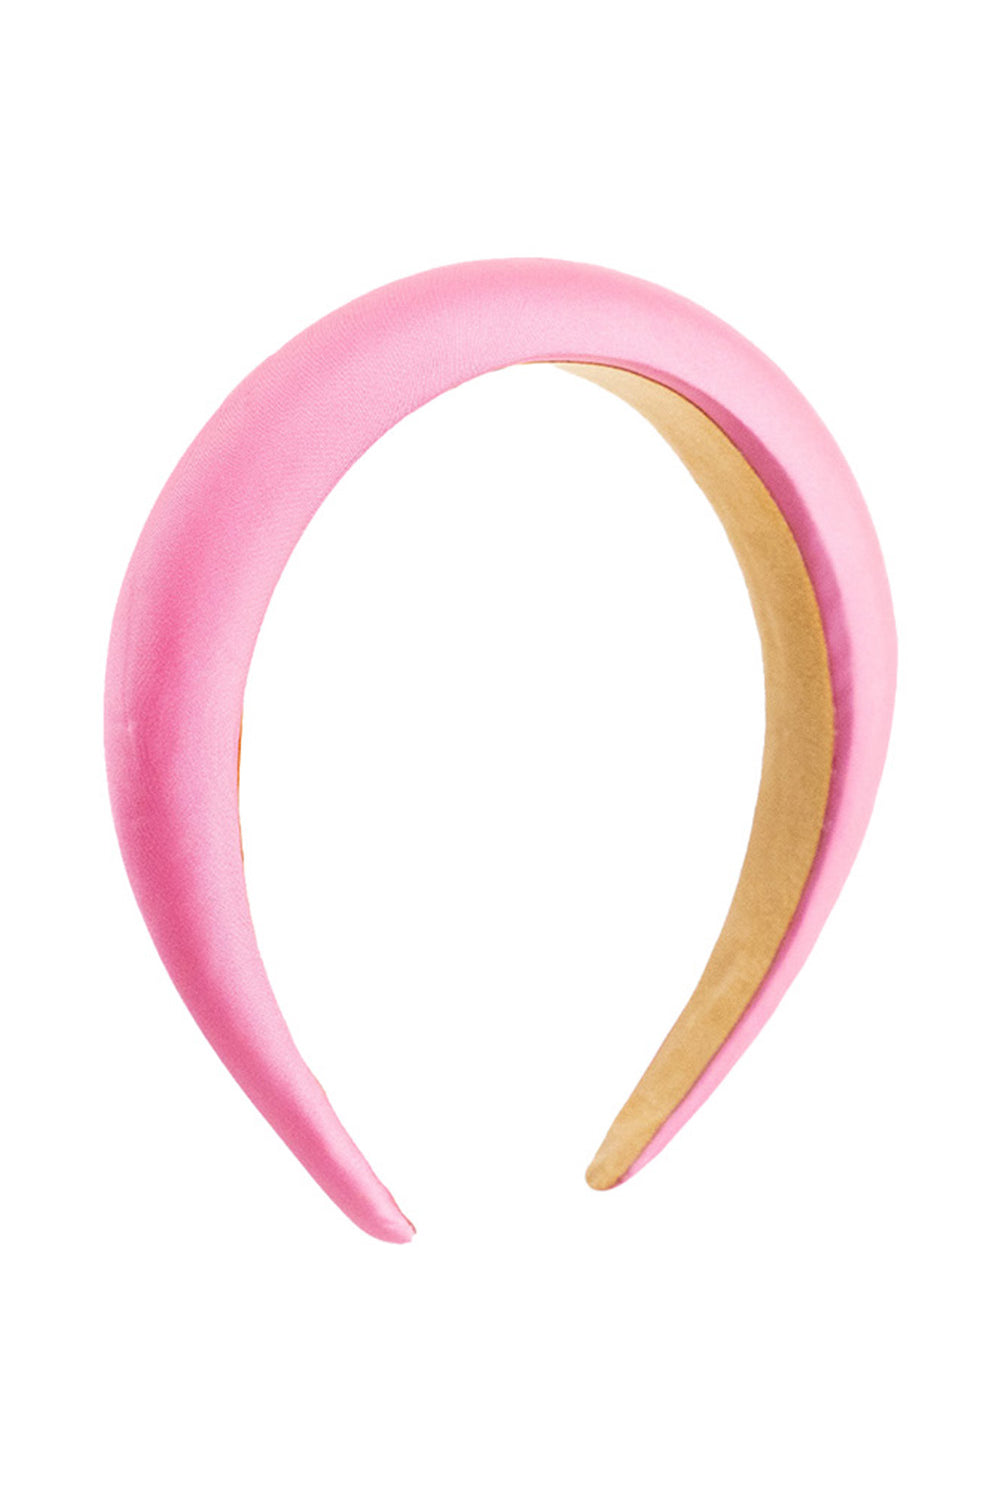 Padded Headband in Pink | women's headband | pink accessories | satin headband | festival headband | wedding headband | holiday | bright | party accessories 